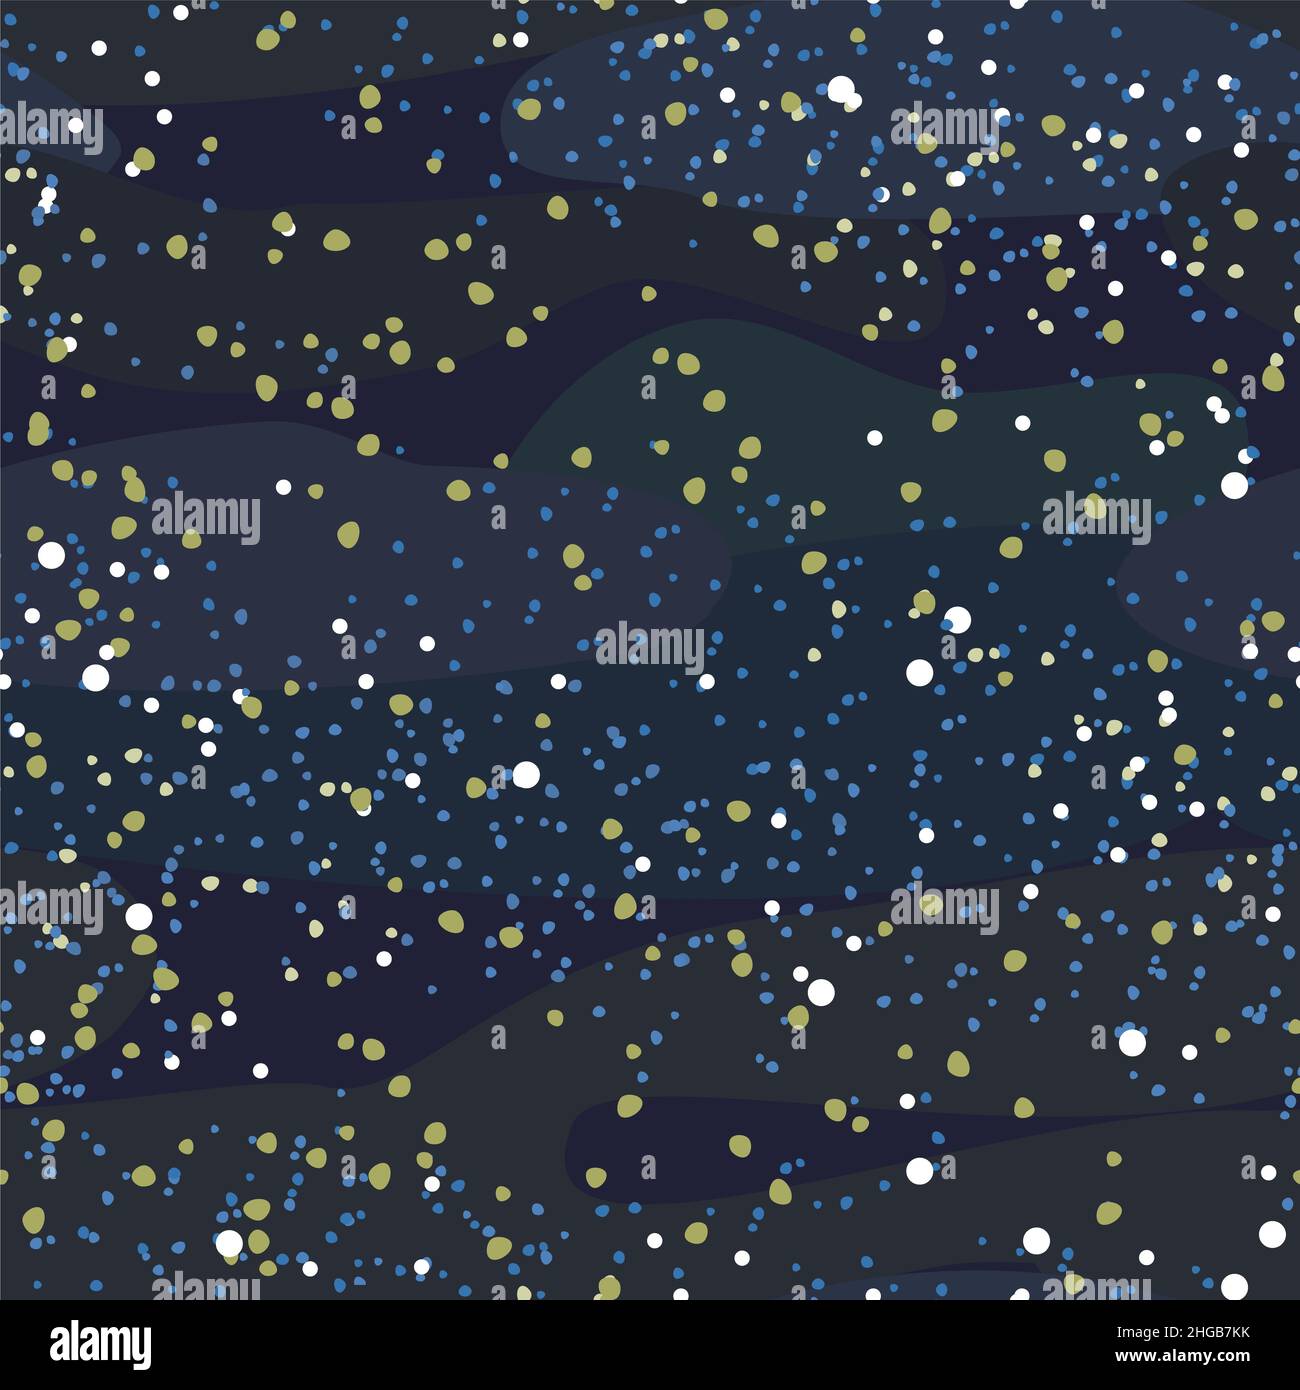 Cosmos background. Seamless pattern. Childrens illustration. Starry sky landscape. Flat style. Cartoon design. Stock Photo